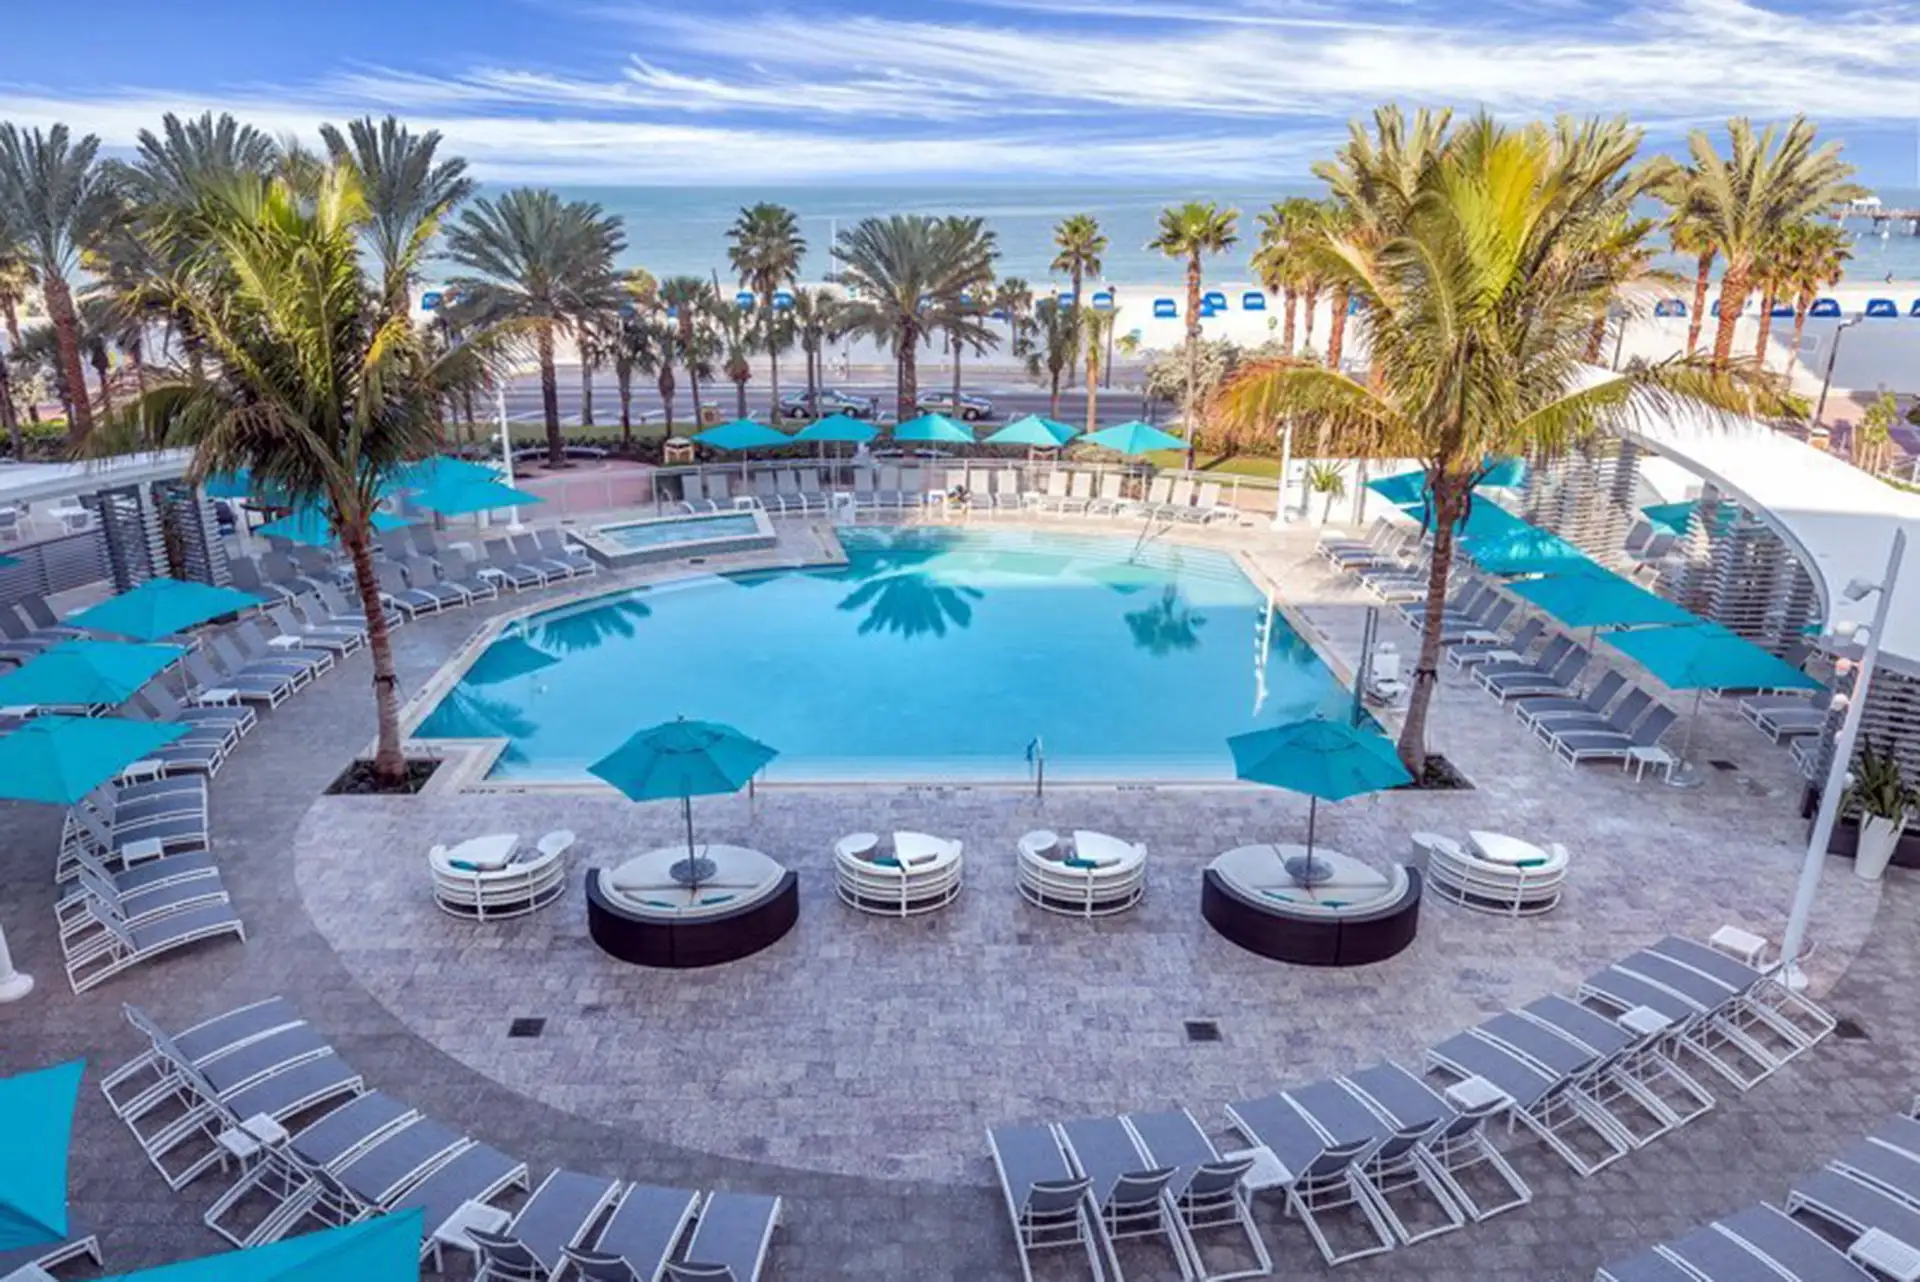 Wyndham Grand Clearwater Beach Resort in Clearwater, Florida